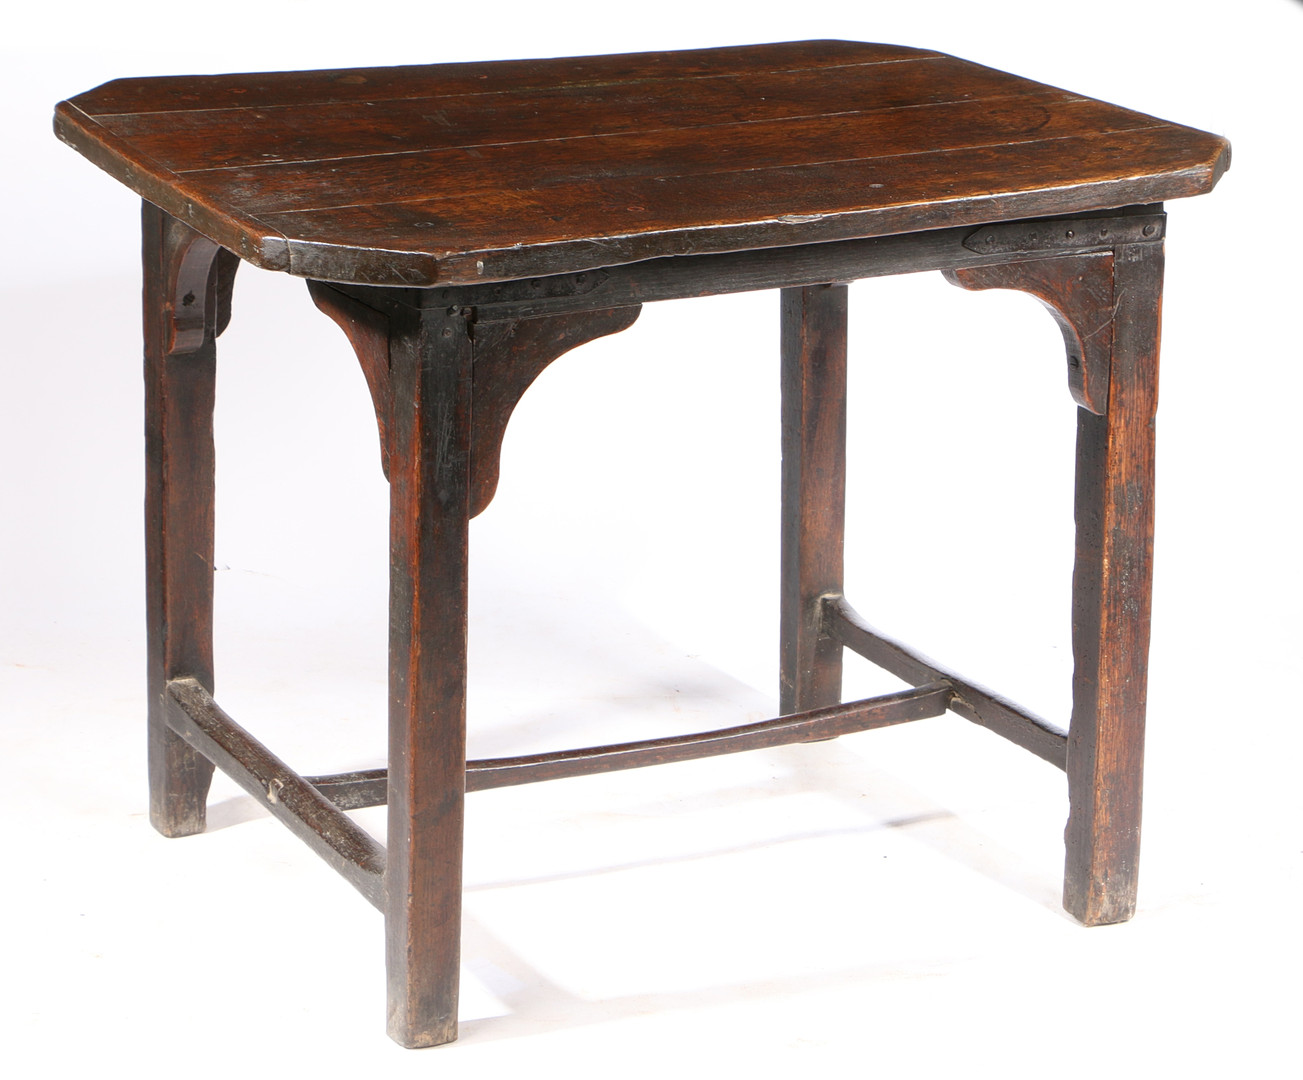 AN OAK 18TH CENTURY OAK CENTRE TABLE, WELSH, CIRCA 1700-30. - Image 2 of 3